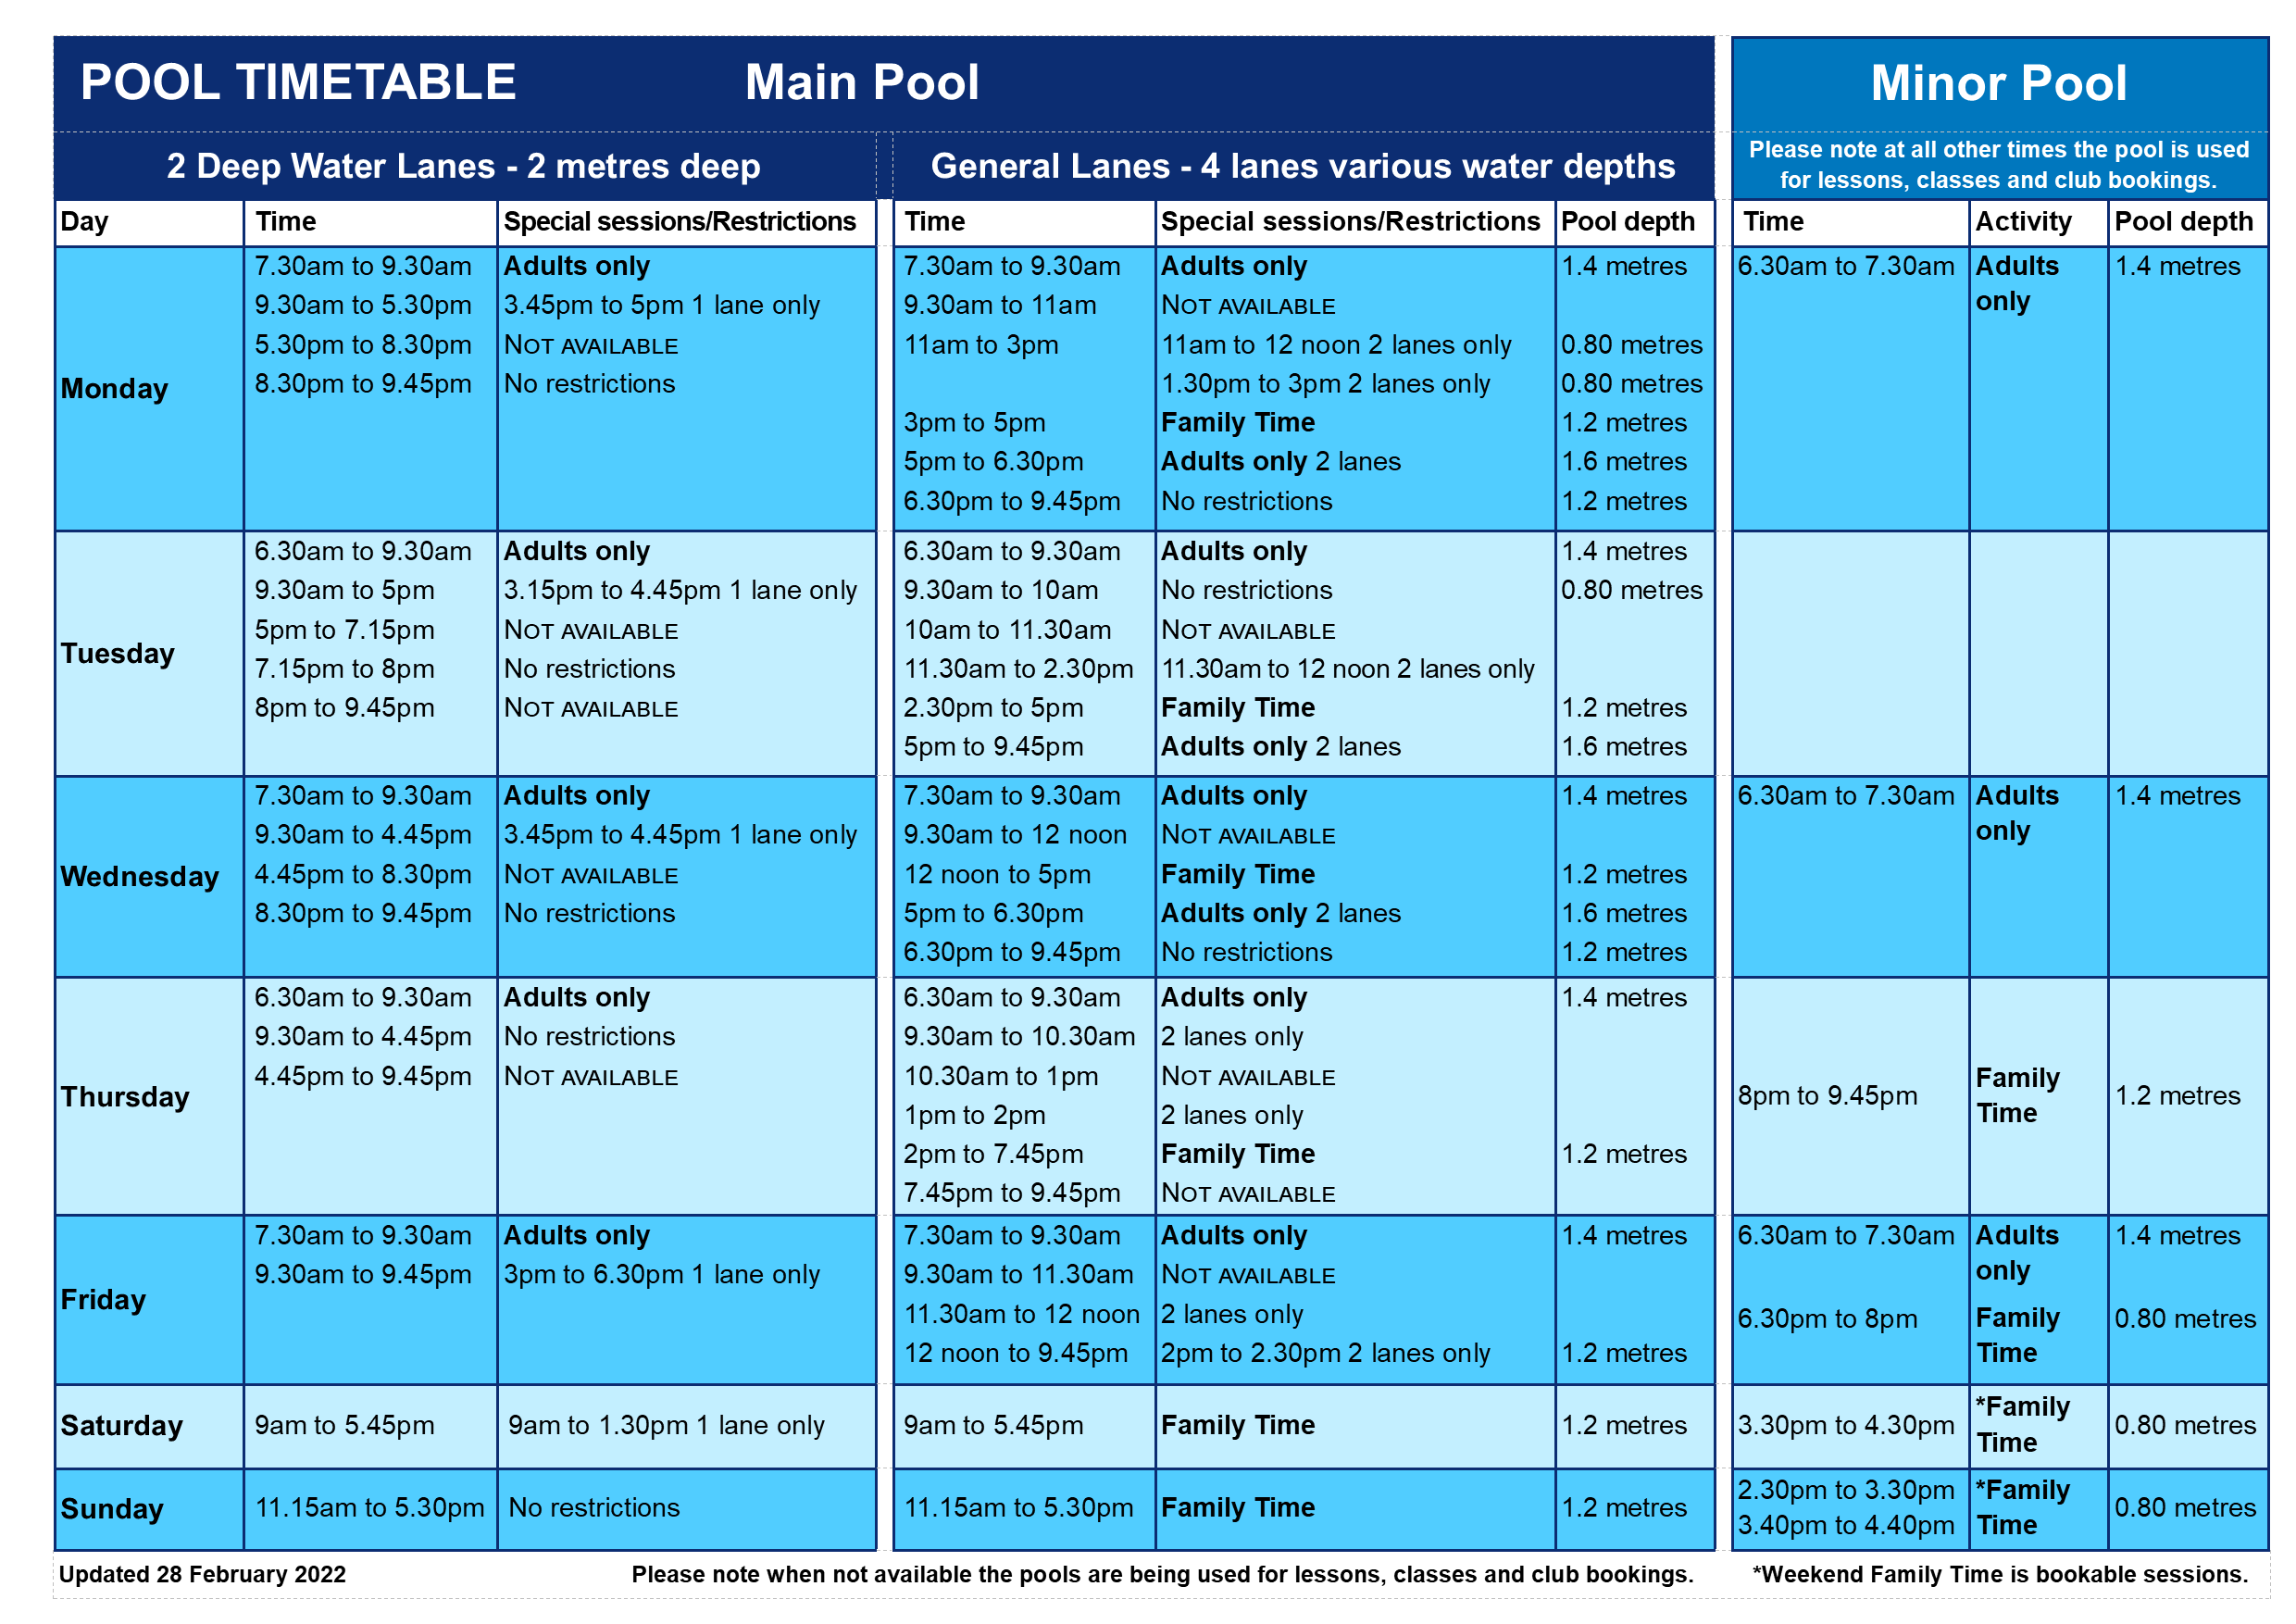 Pool Timetable at Ards Blair Mayne Spring 2021